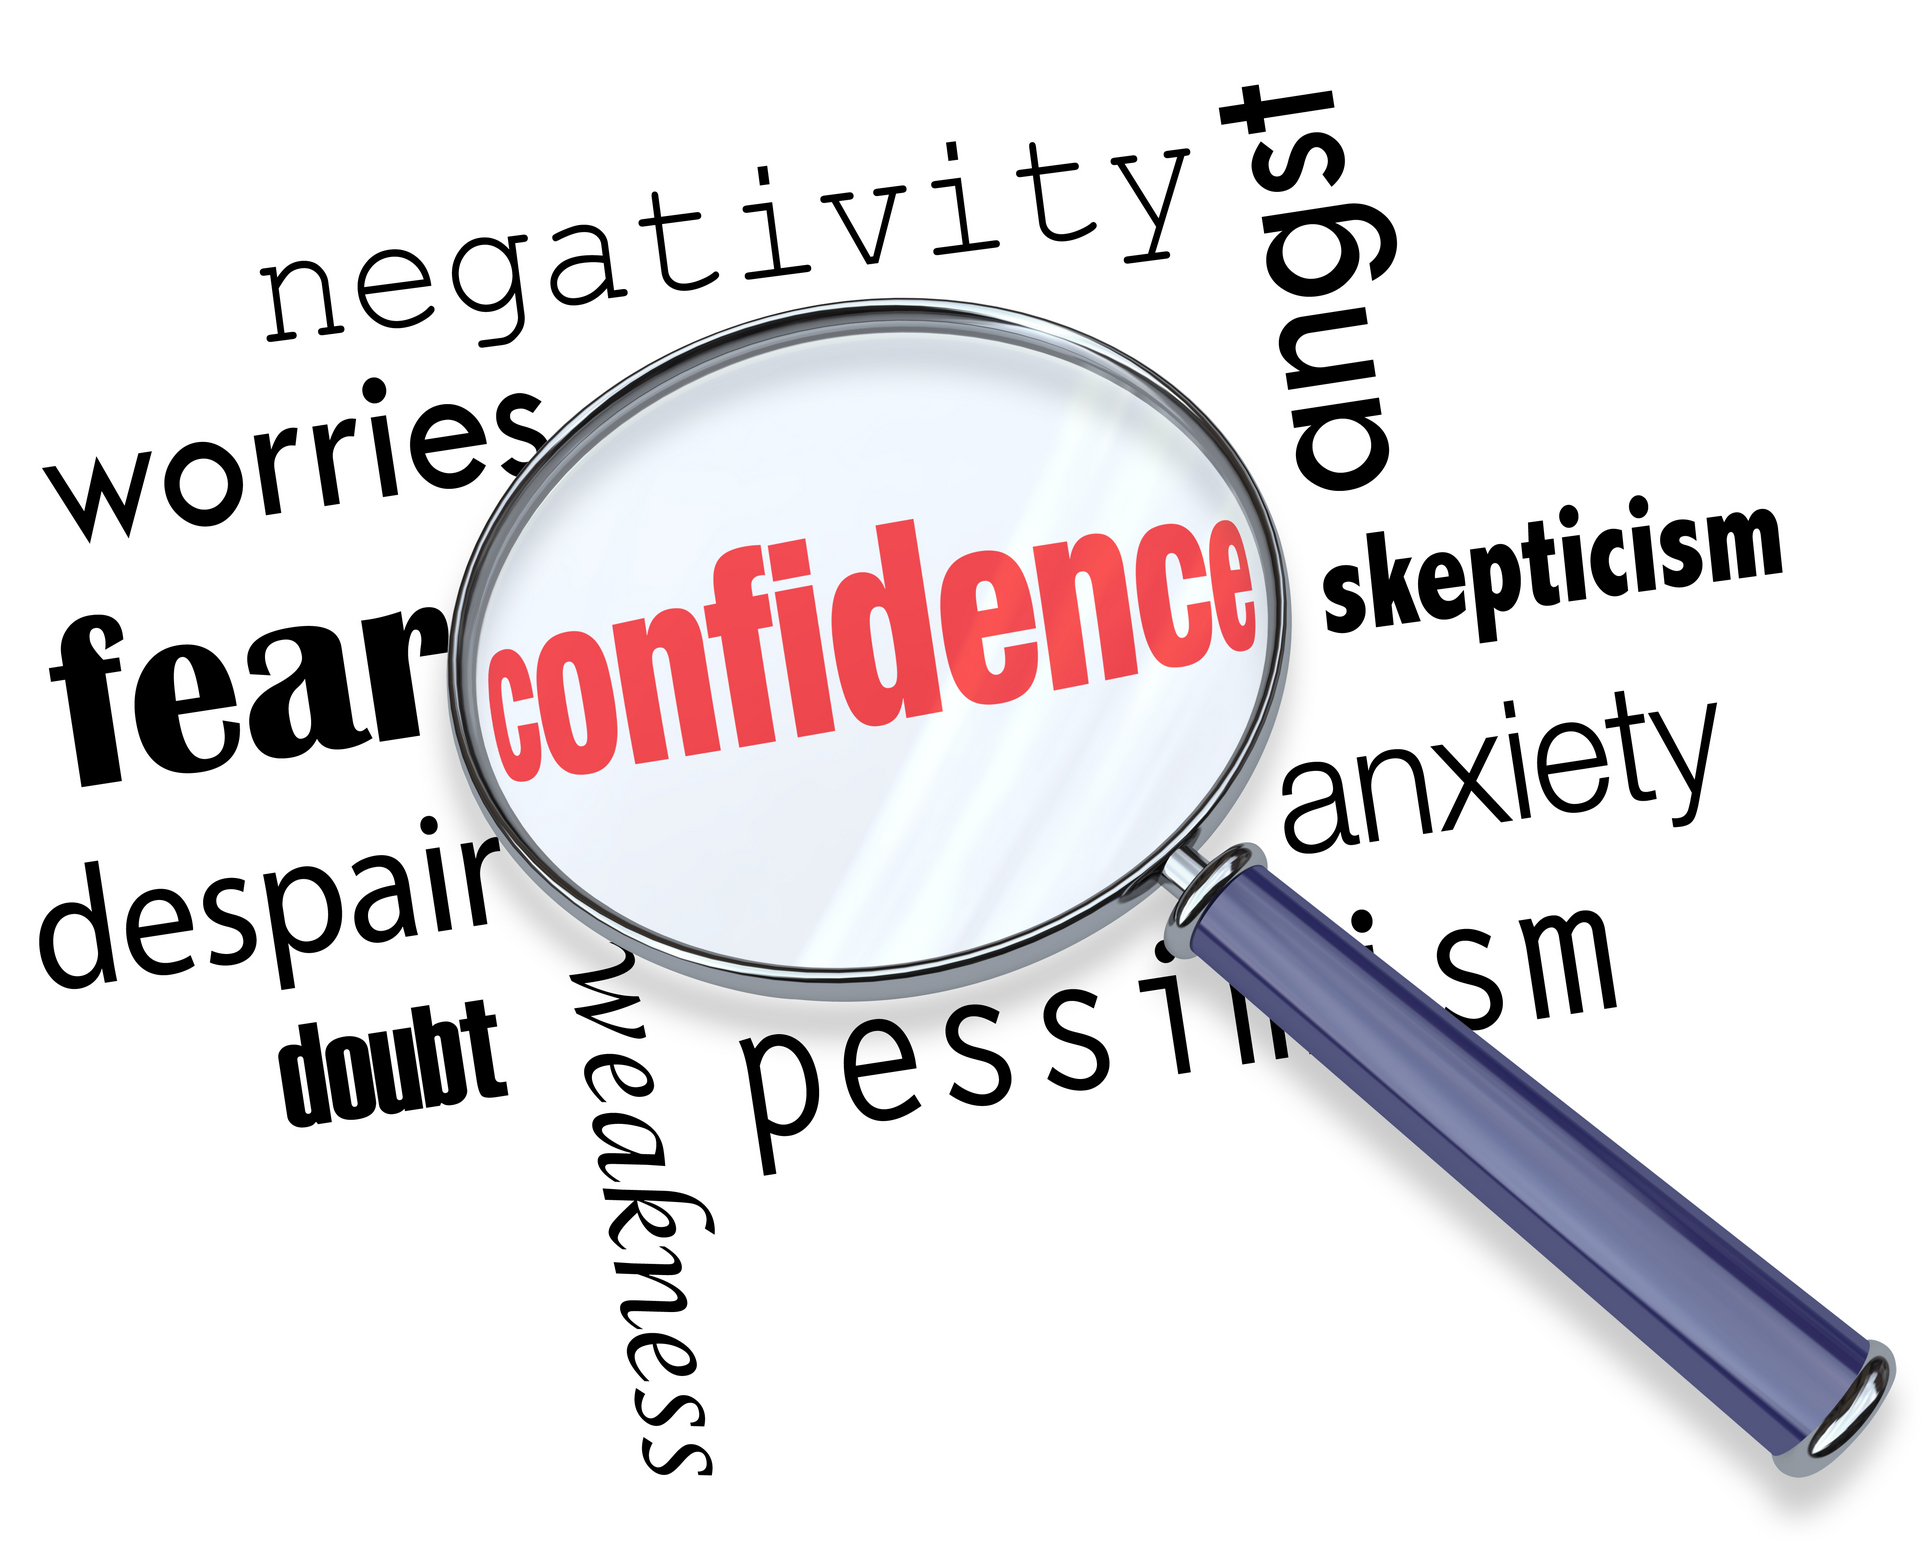 how to speak with confidence